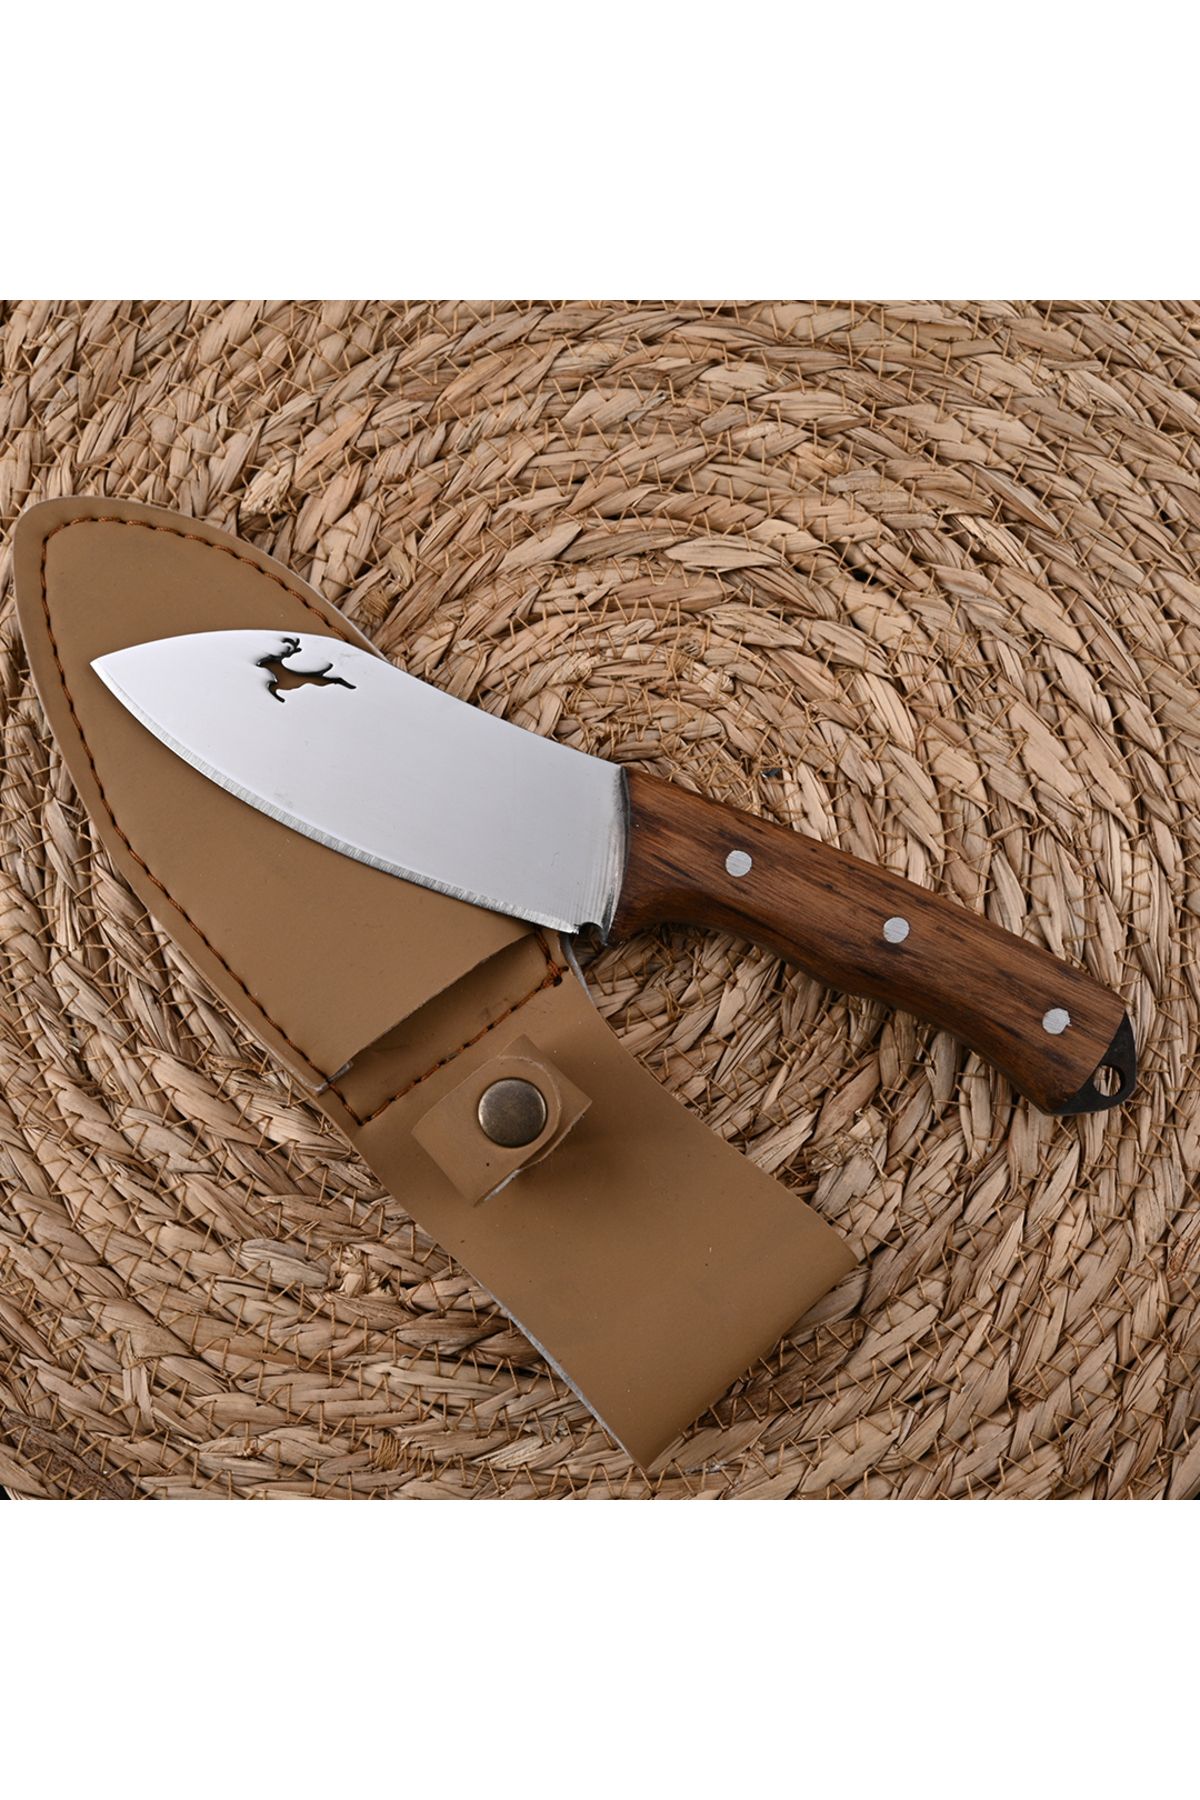 Cavit İnox Outdoor Kamp Hayatta Kalma Bıçağı